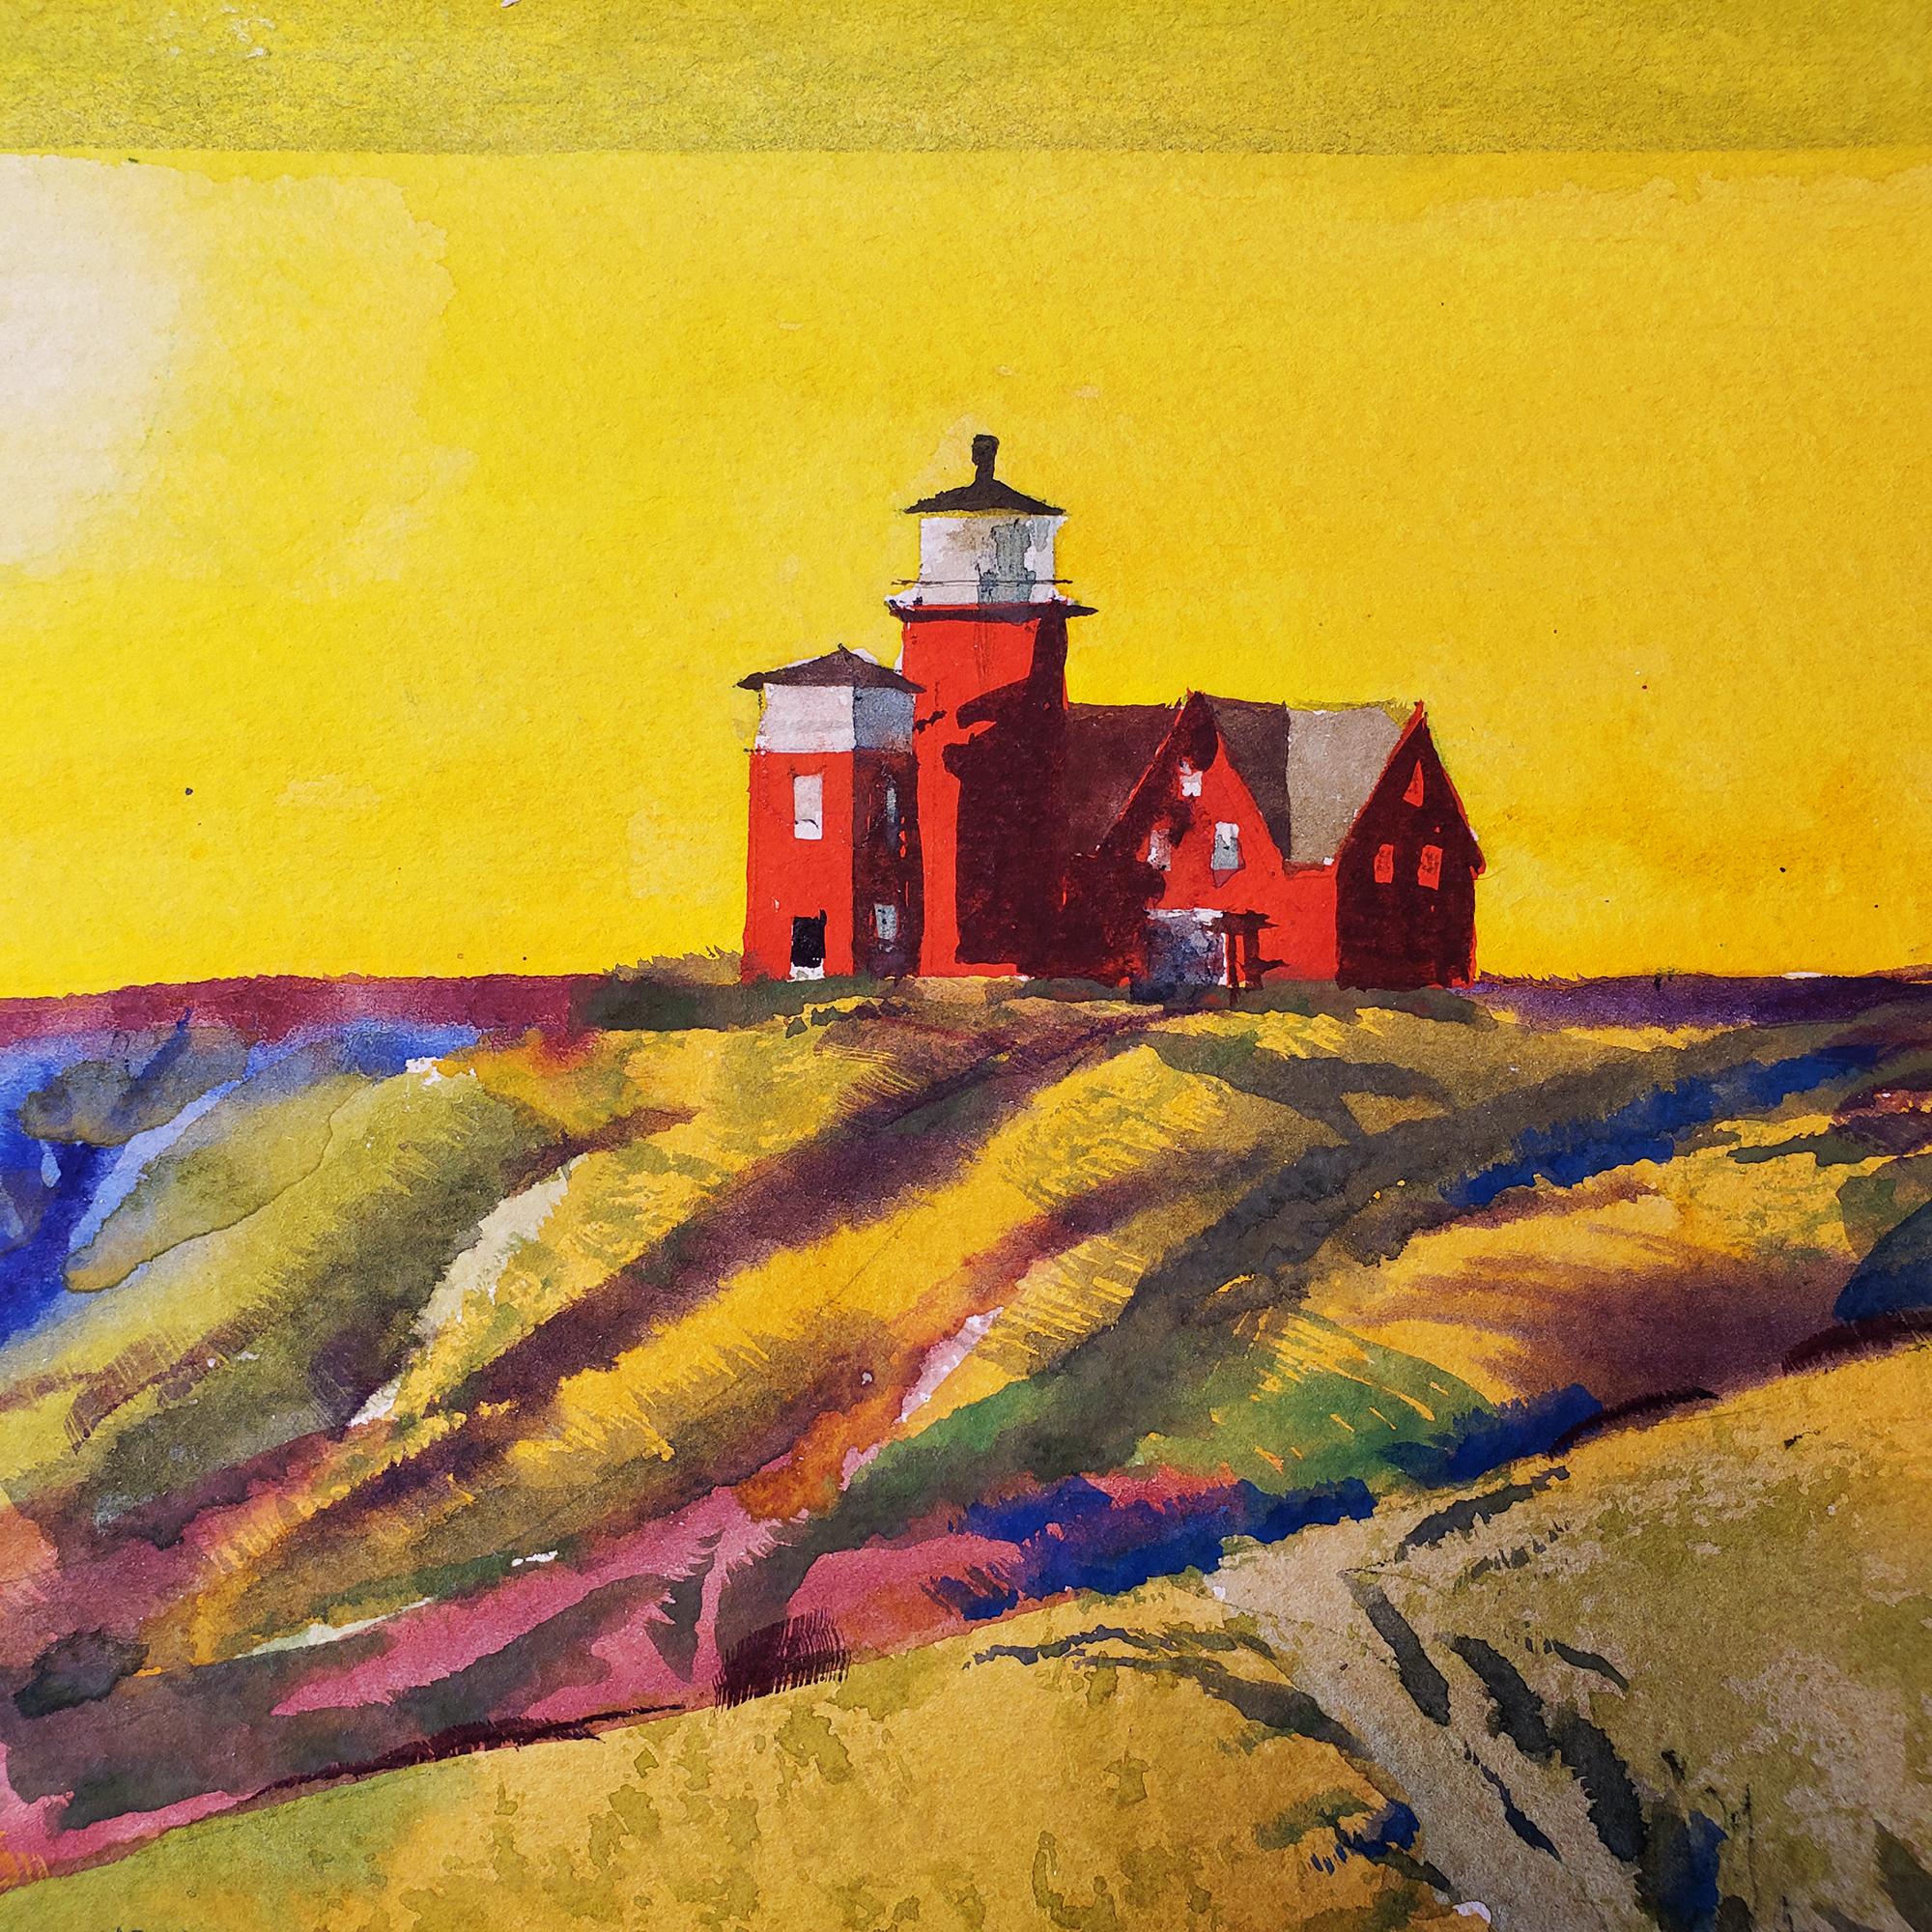 Summertime - Martha's Vineyard  - Sunset Golden Sky and Red Lighthouse  - Art by Millard Sheets